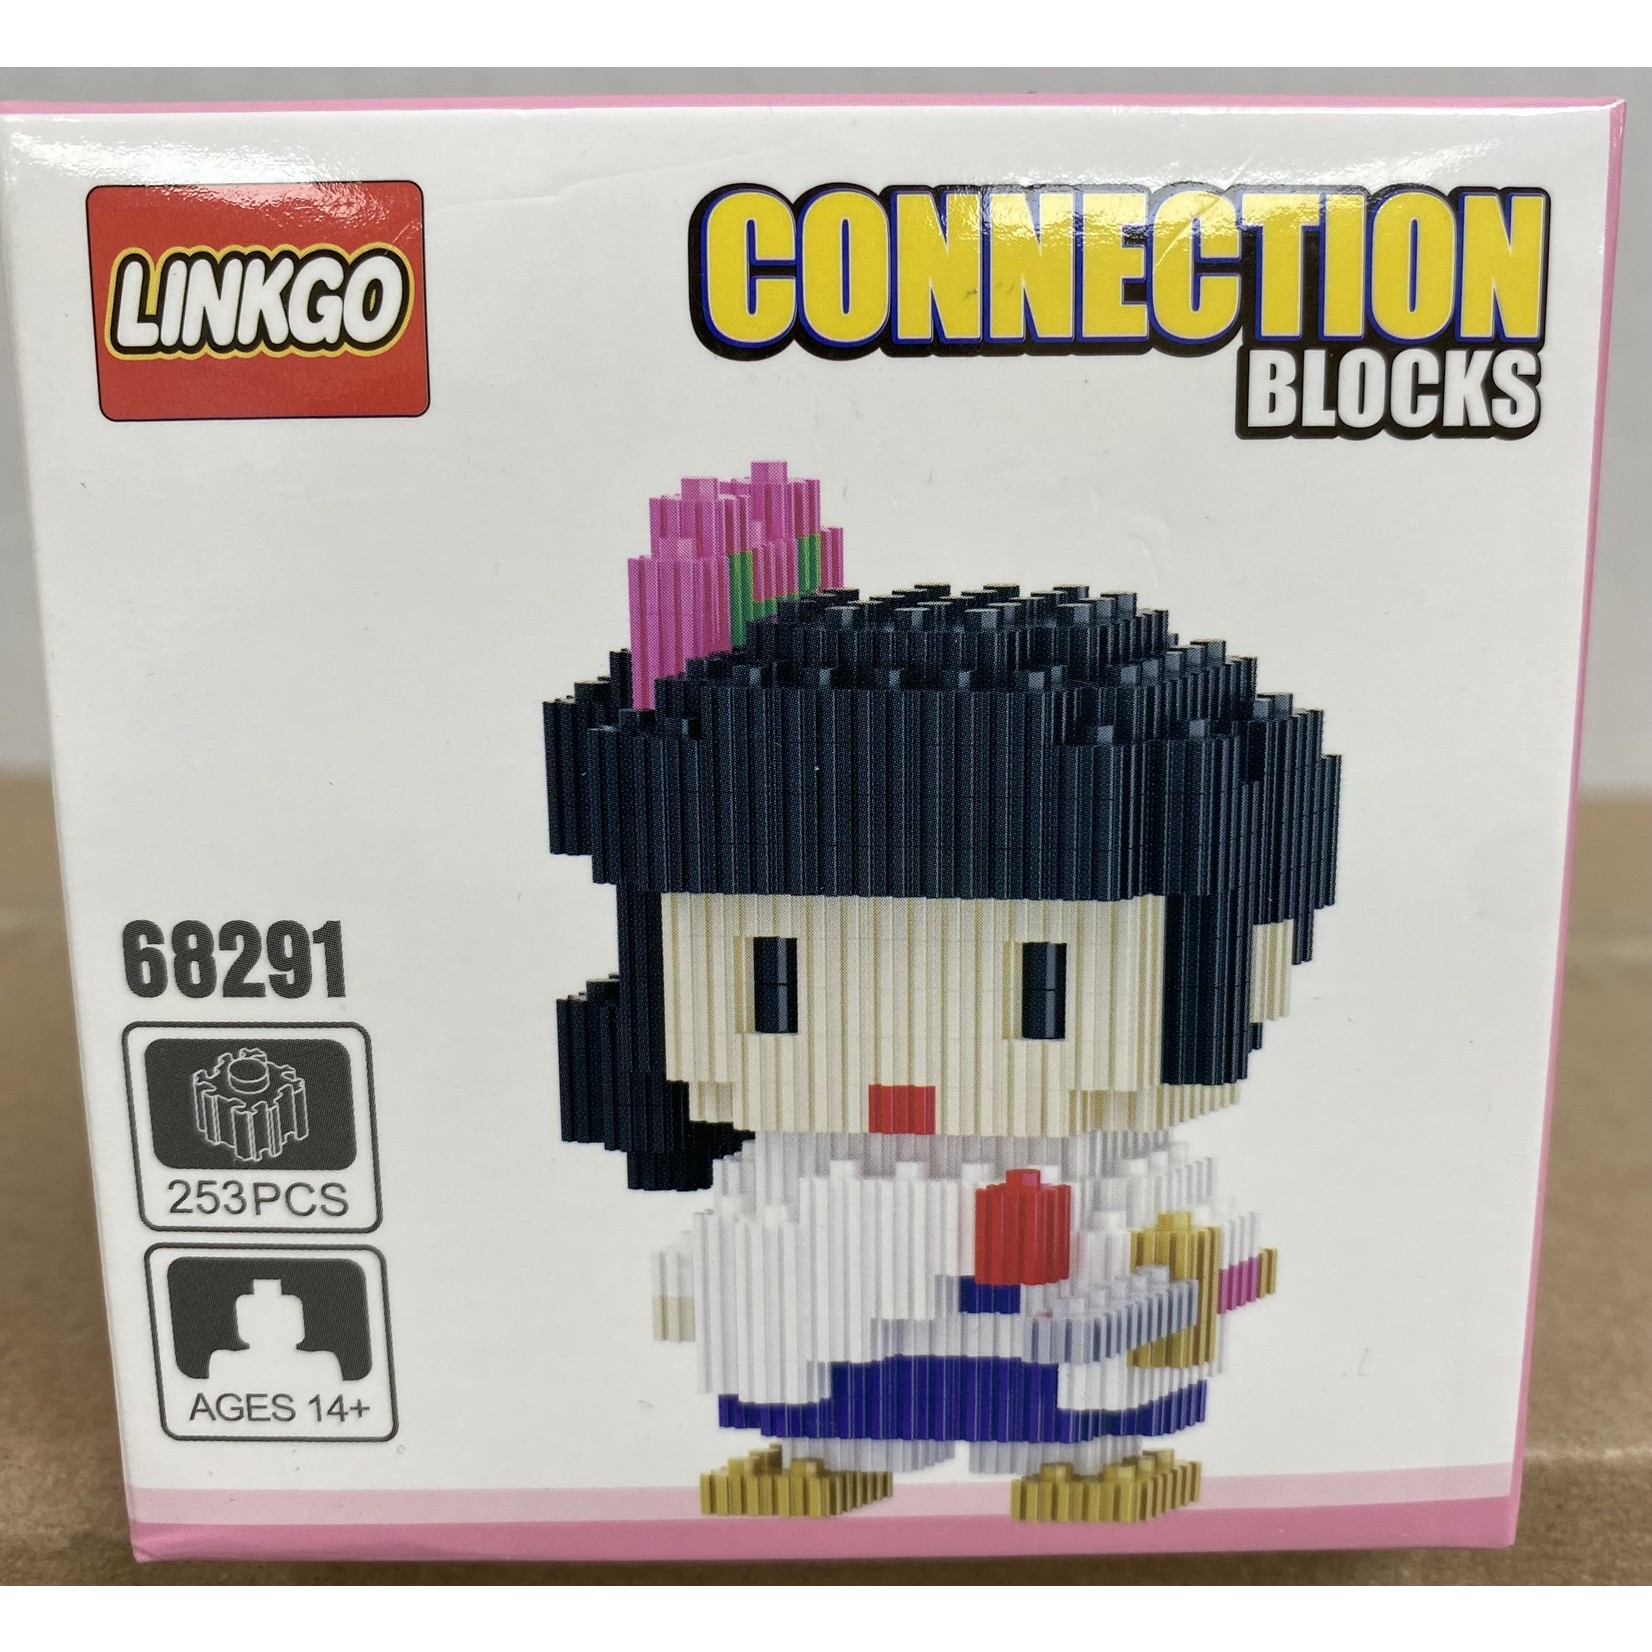 Linkgo - Connection Blocks - 68291